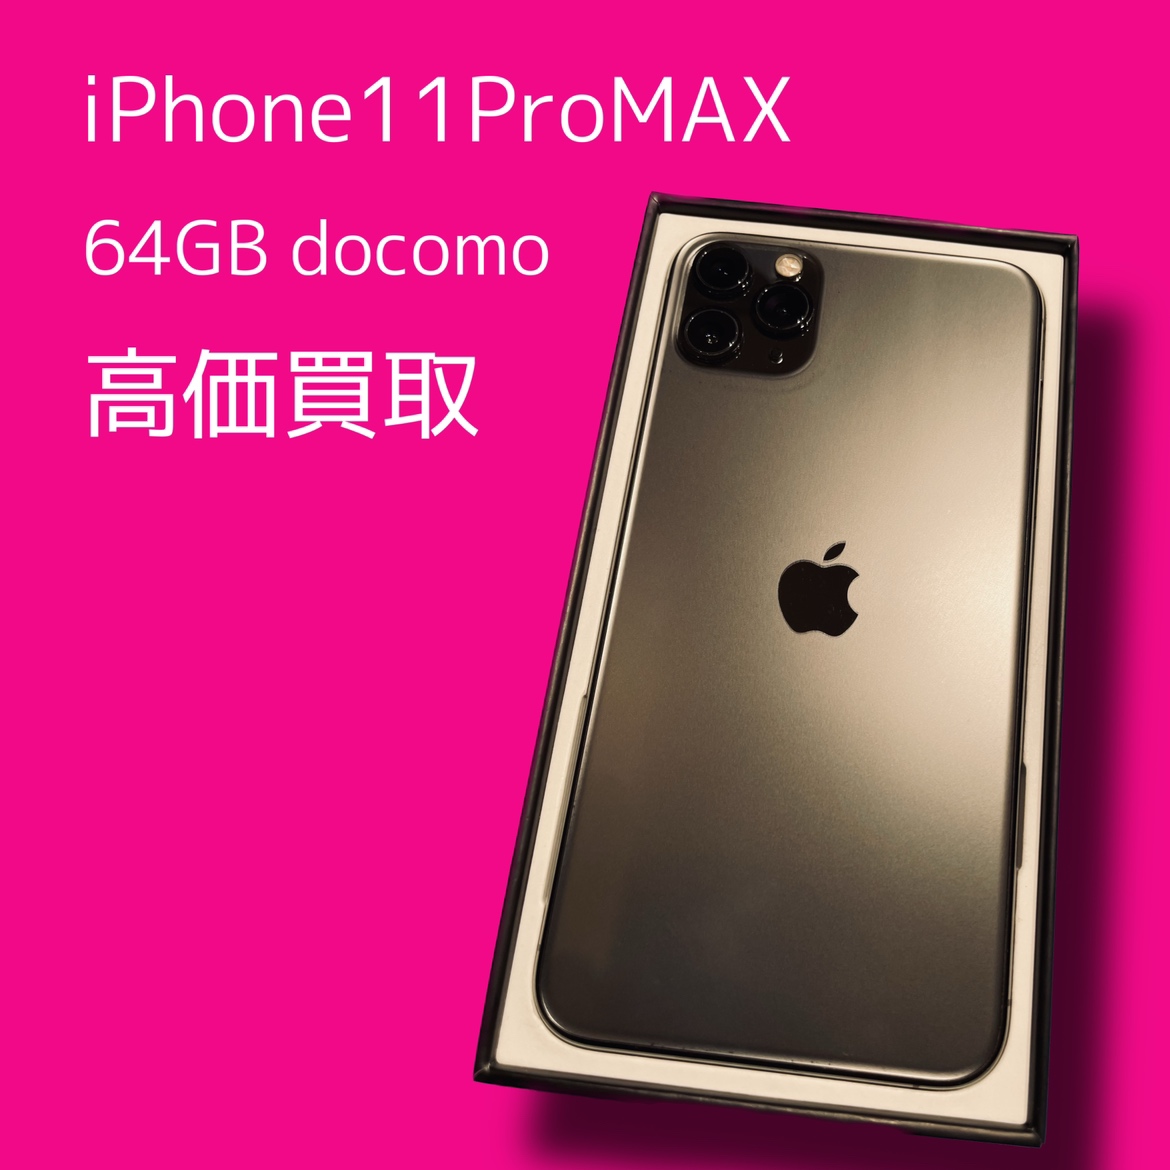 iPhone11ProMAX 64GB docomo〇 Cランク品【天神地下街店】